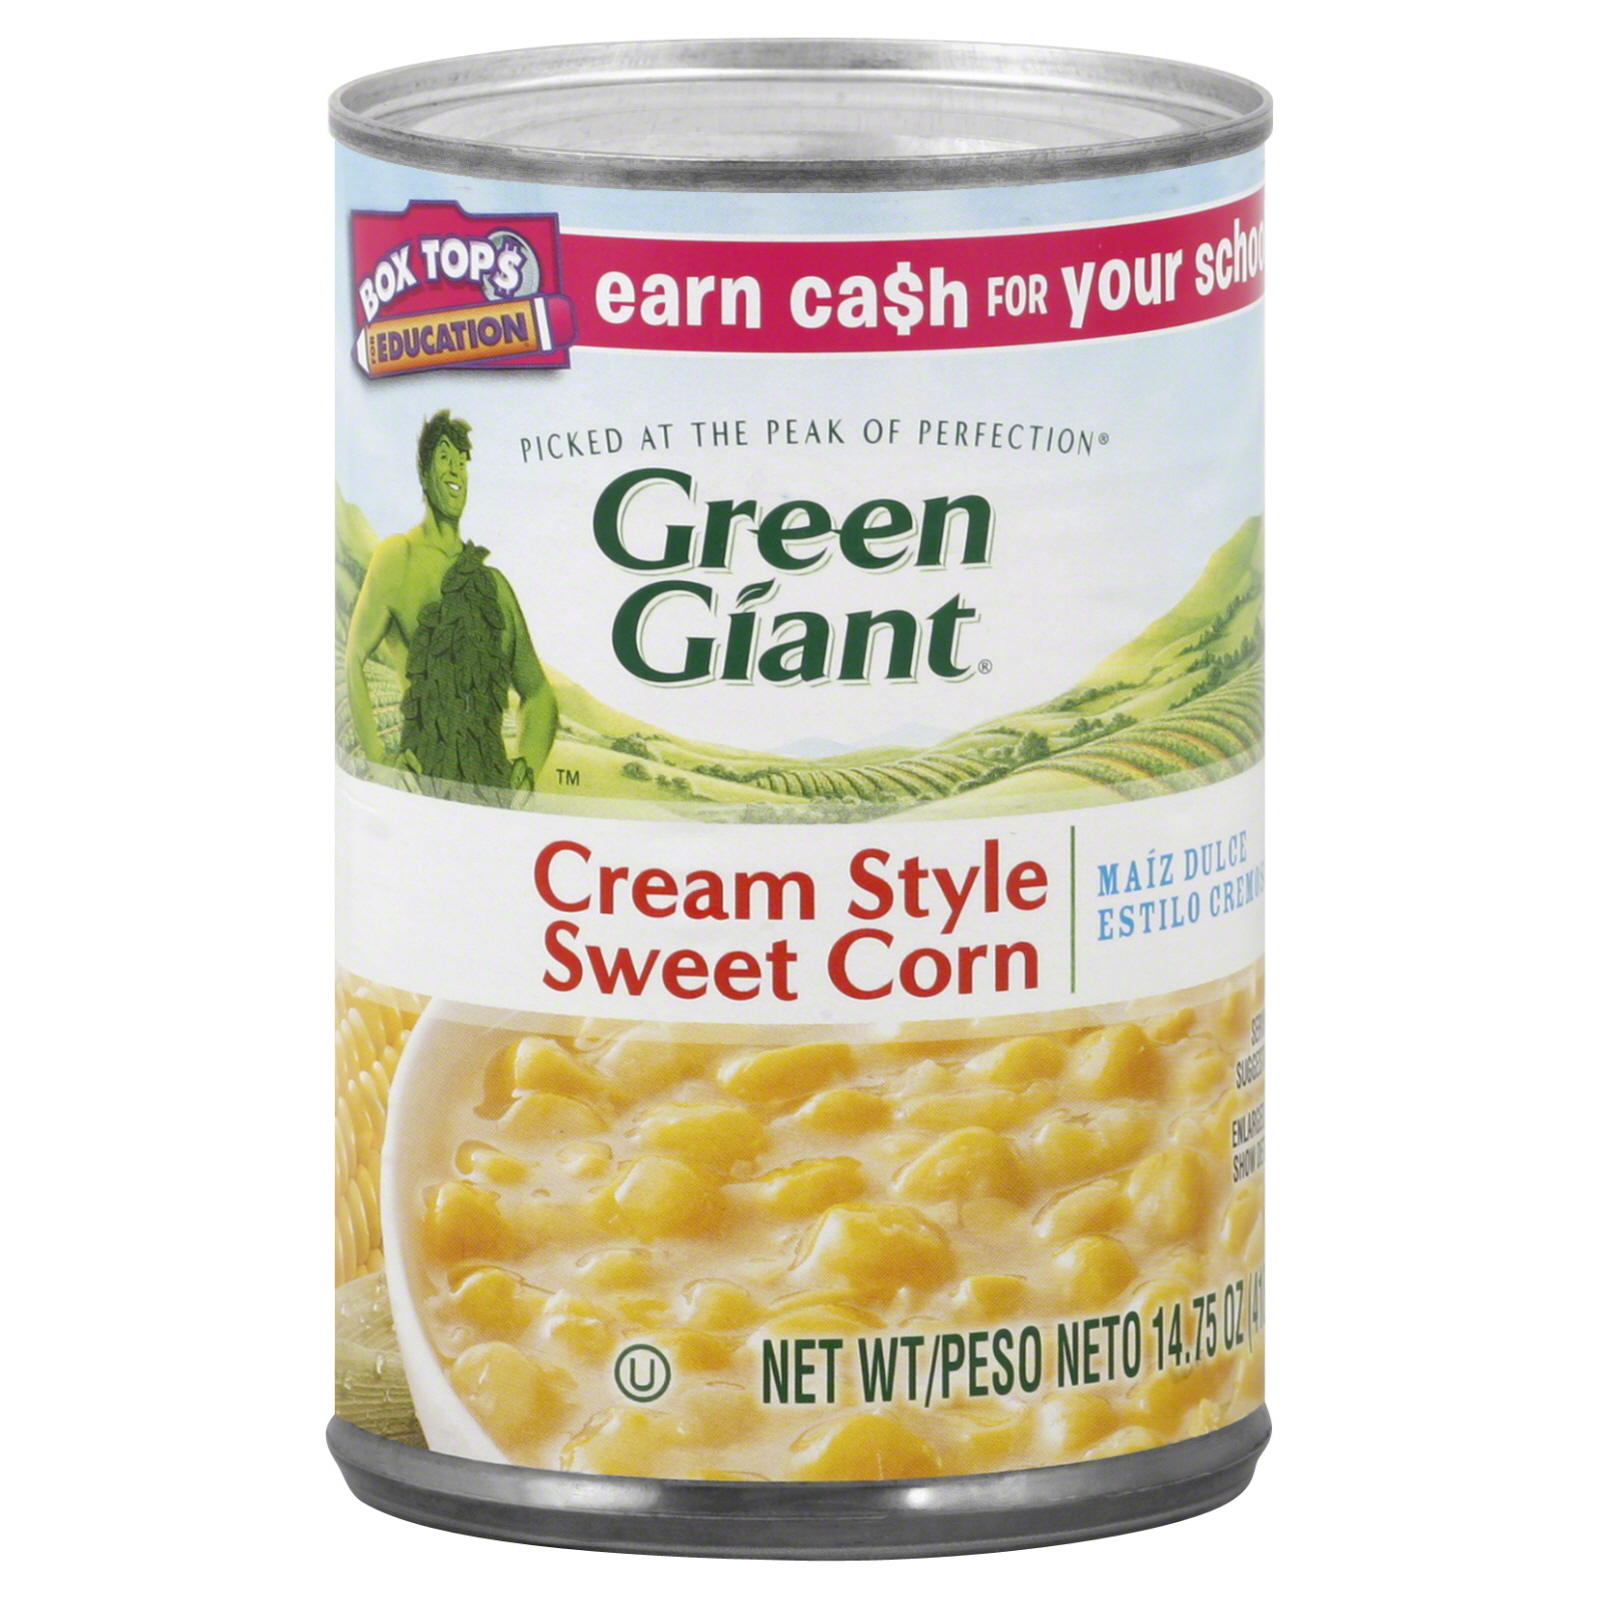 Green Giant Cream Style Sweet Corn, 14.75 oz (418 g)